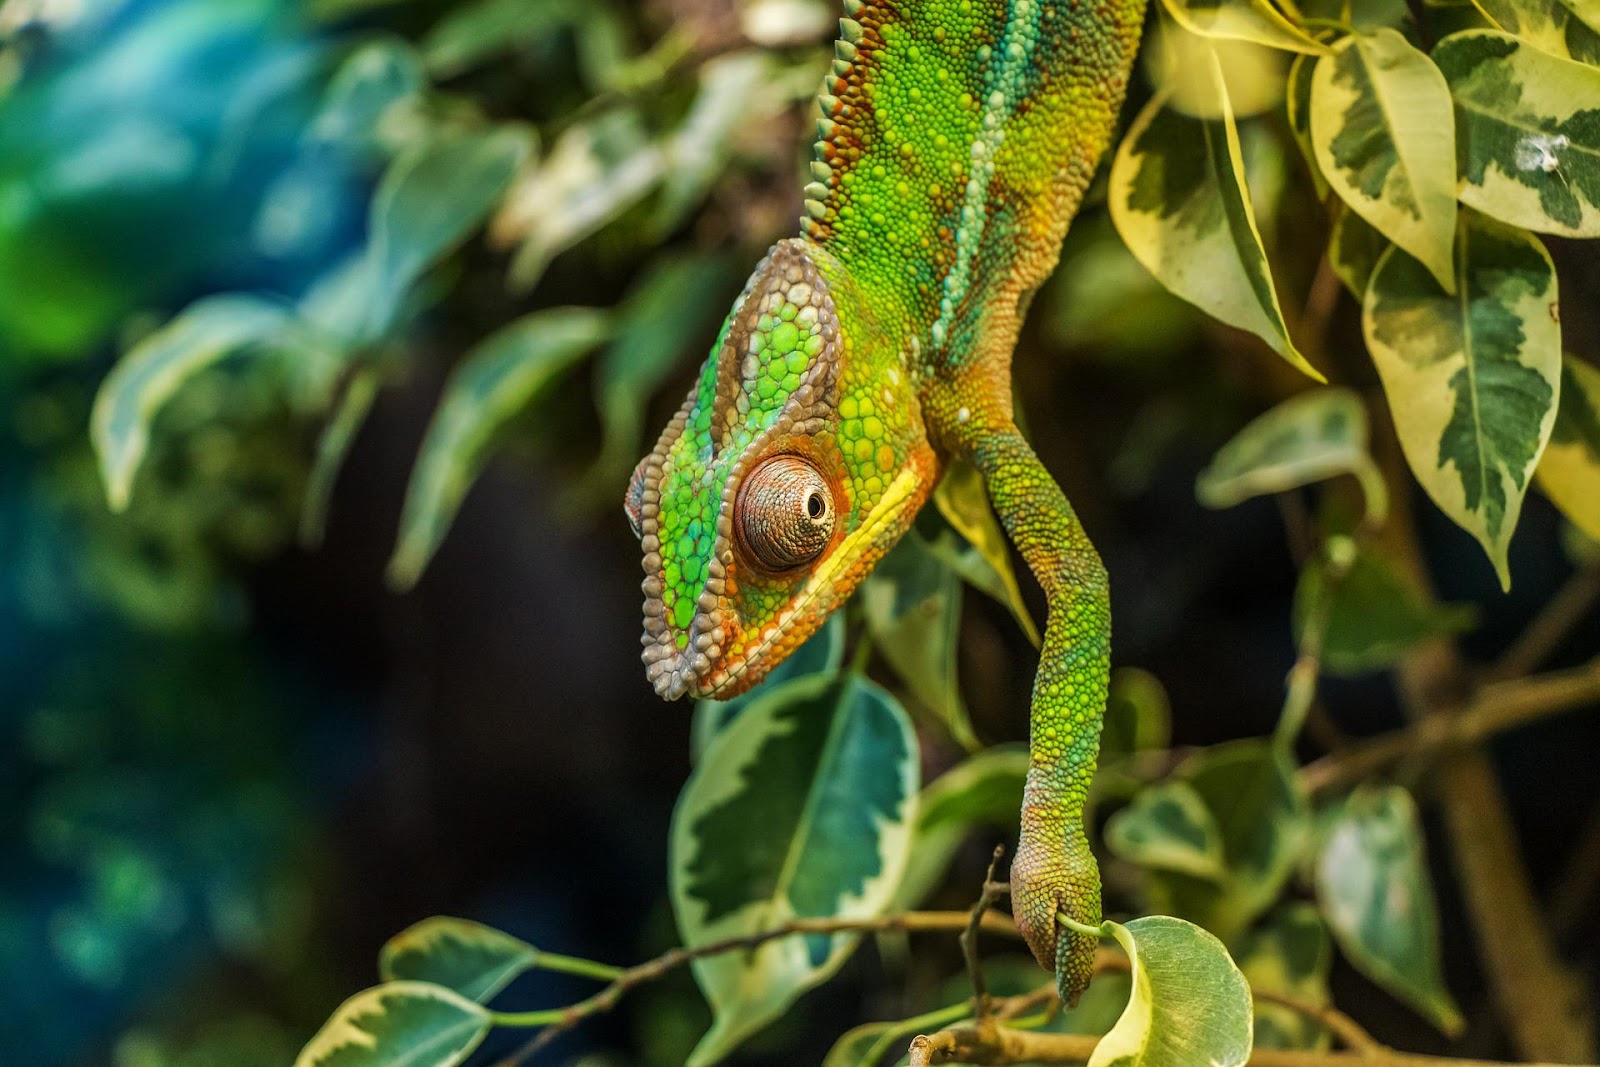 Chameleon climbing a branch